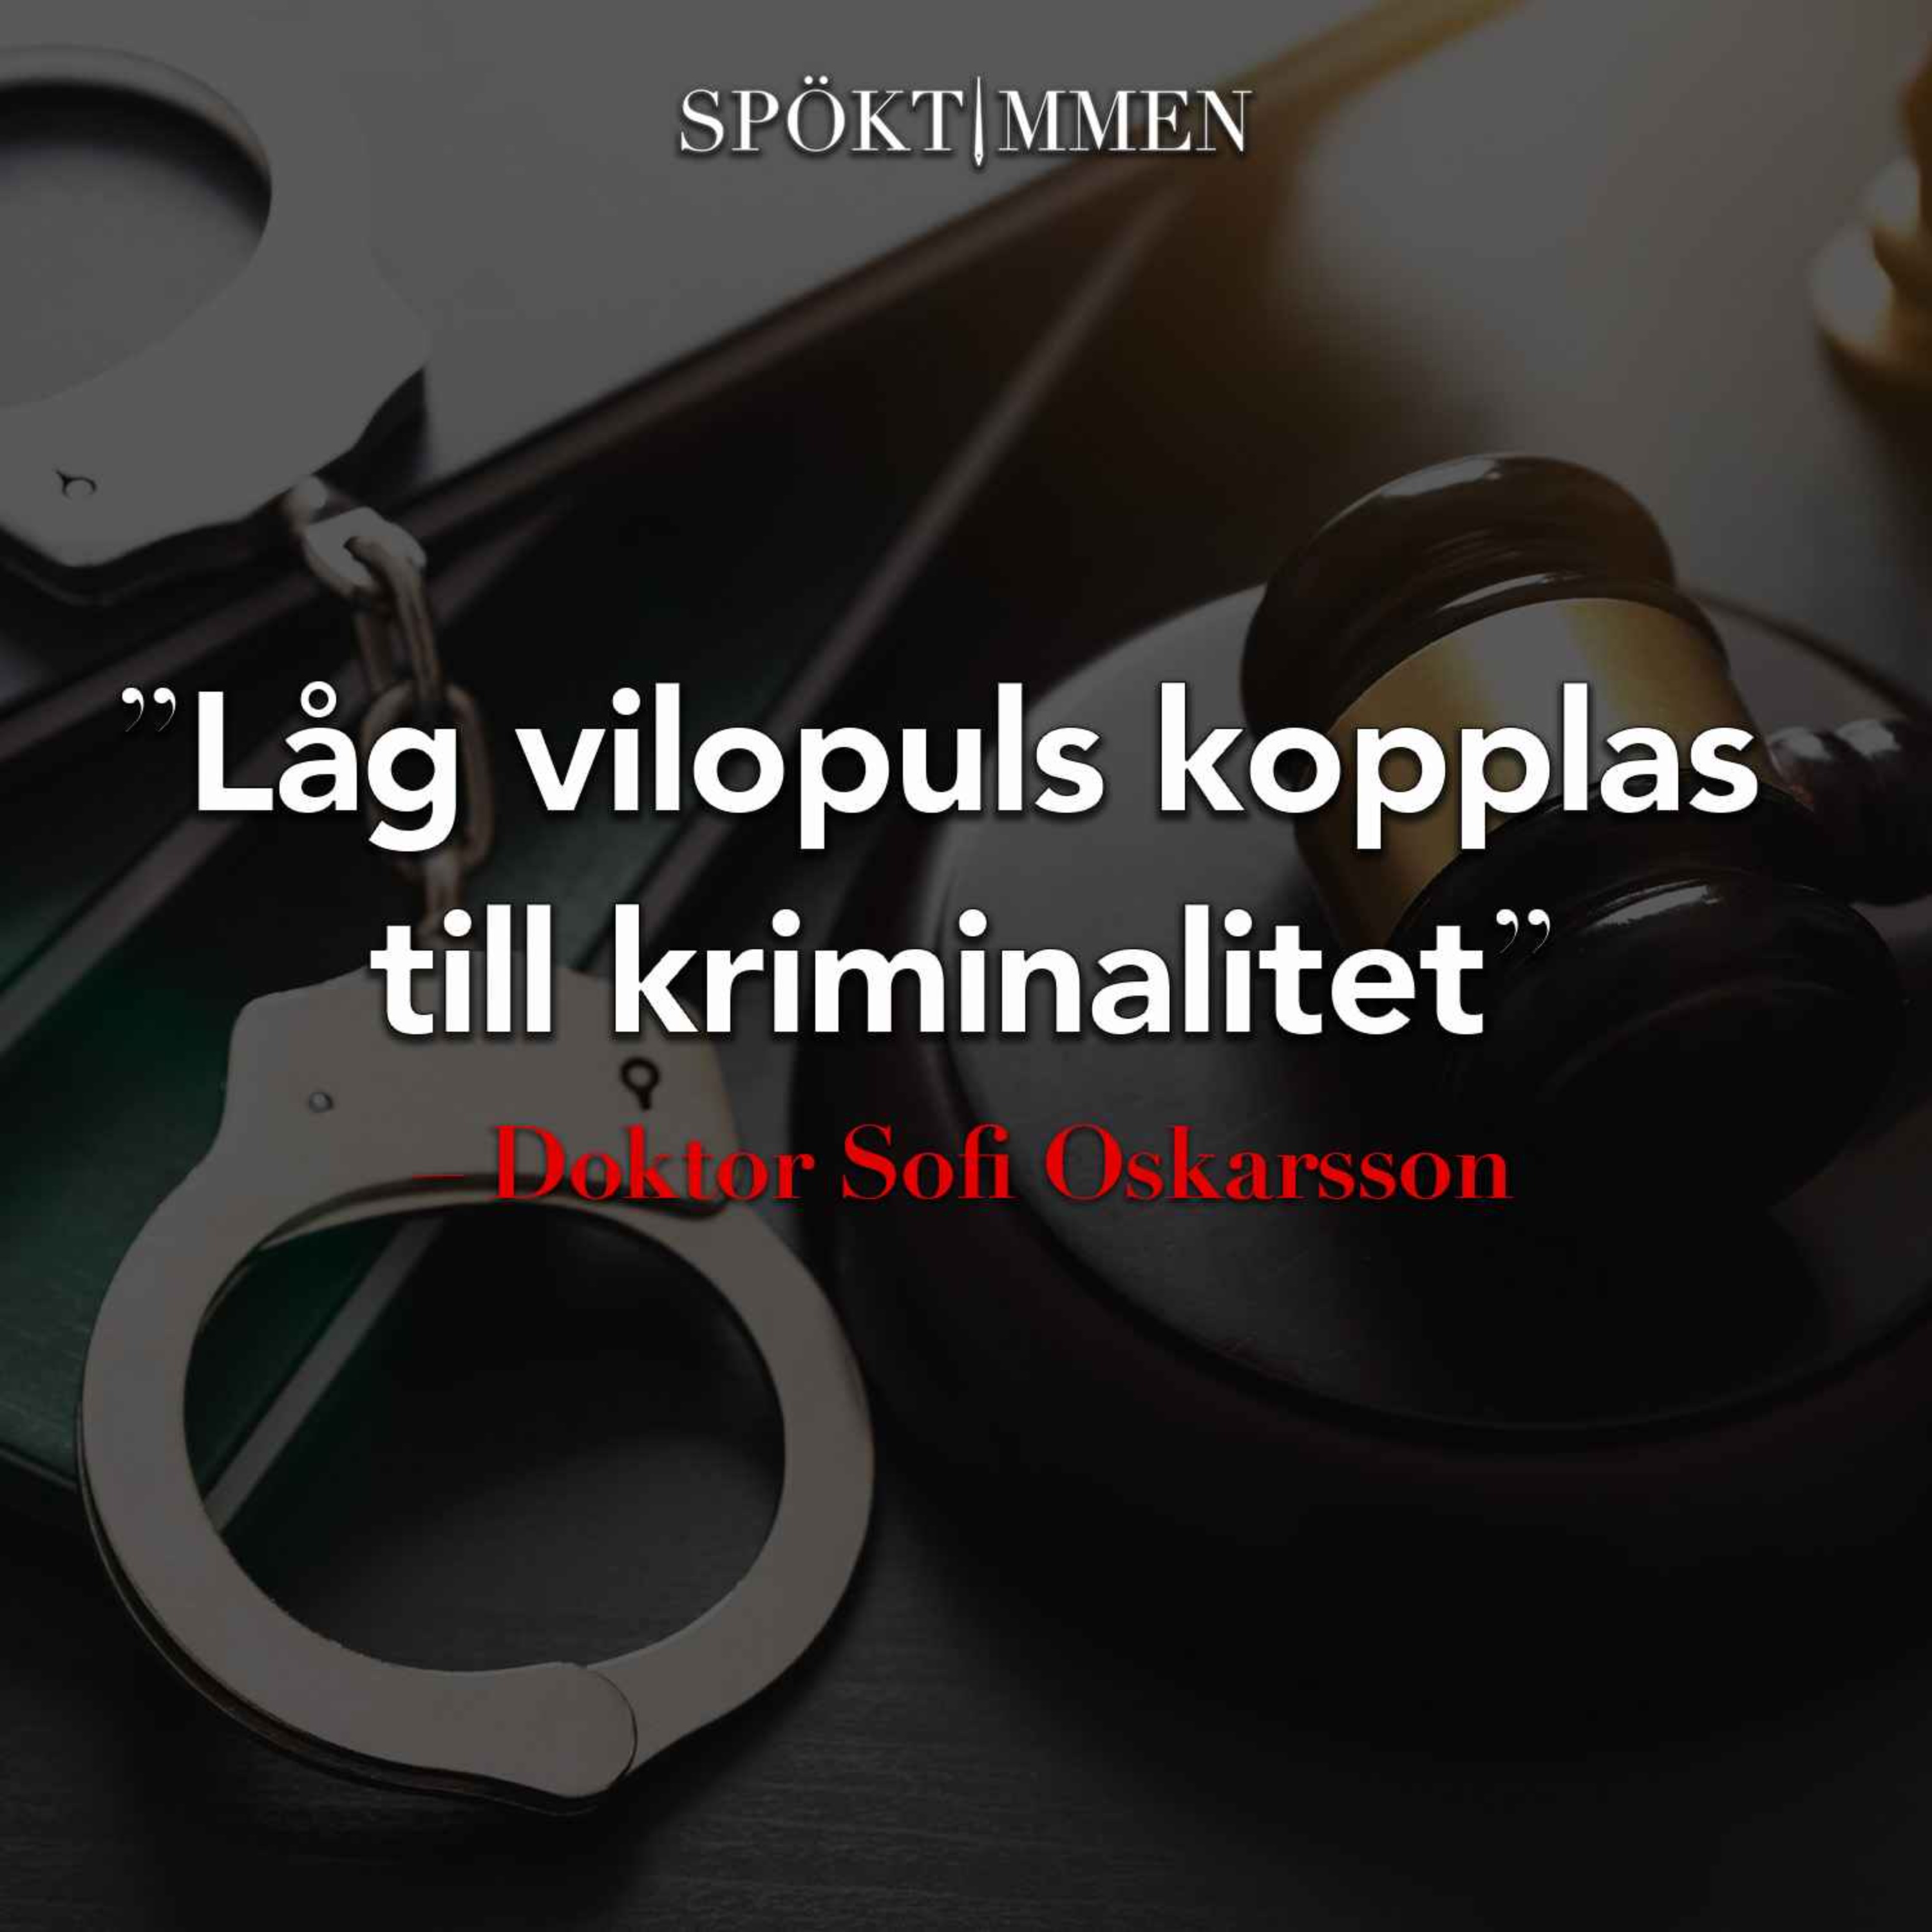 cover art for "Låg vilopuls kopplas till kriminalitet" – Doktor Sofi Oskarsson